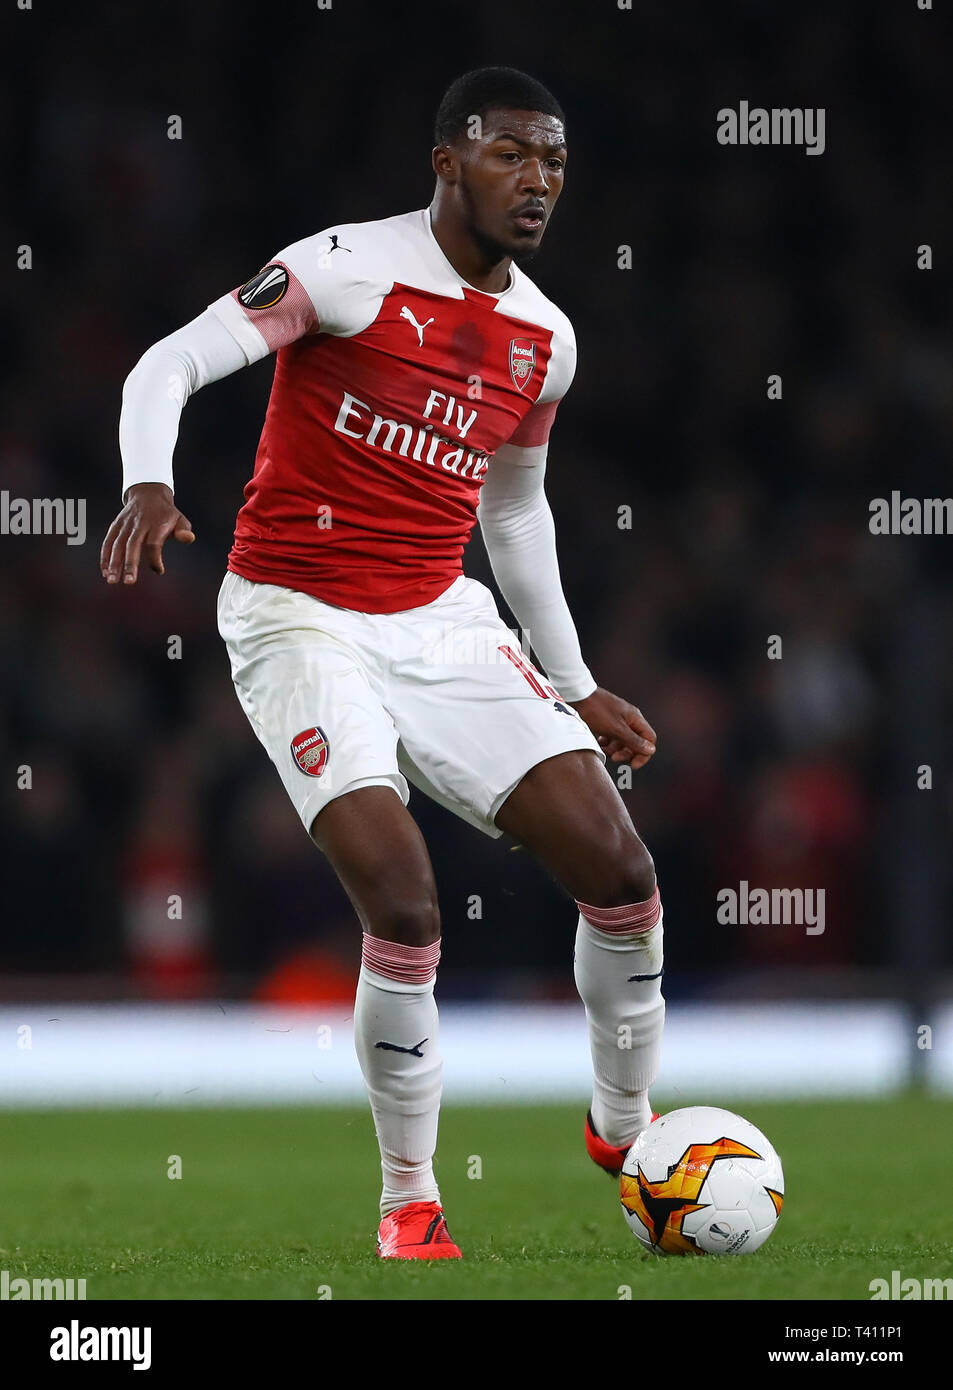 Ainsley Maitland-Niles of Arsenal - Arsenal v Napoli, UEFA Europa League Quarter Final - 1st Leg, Emirates Stadium, London - 11th April 2019 Stock Photo